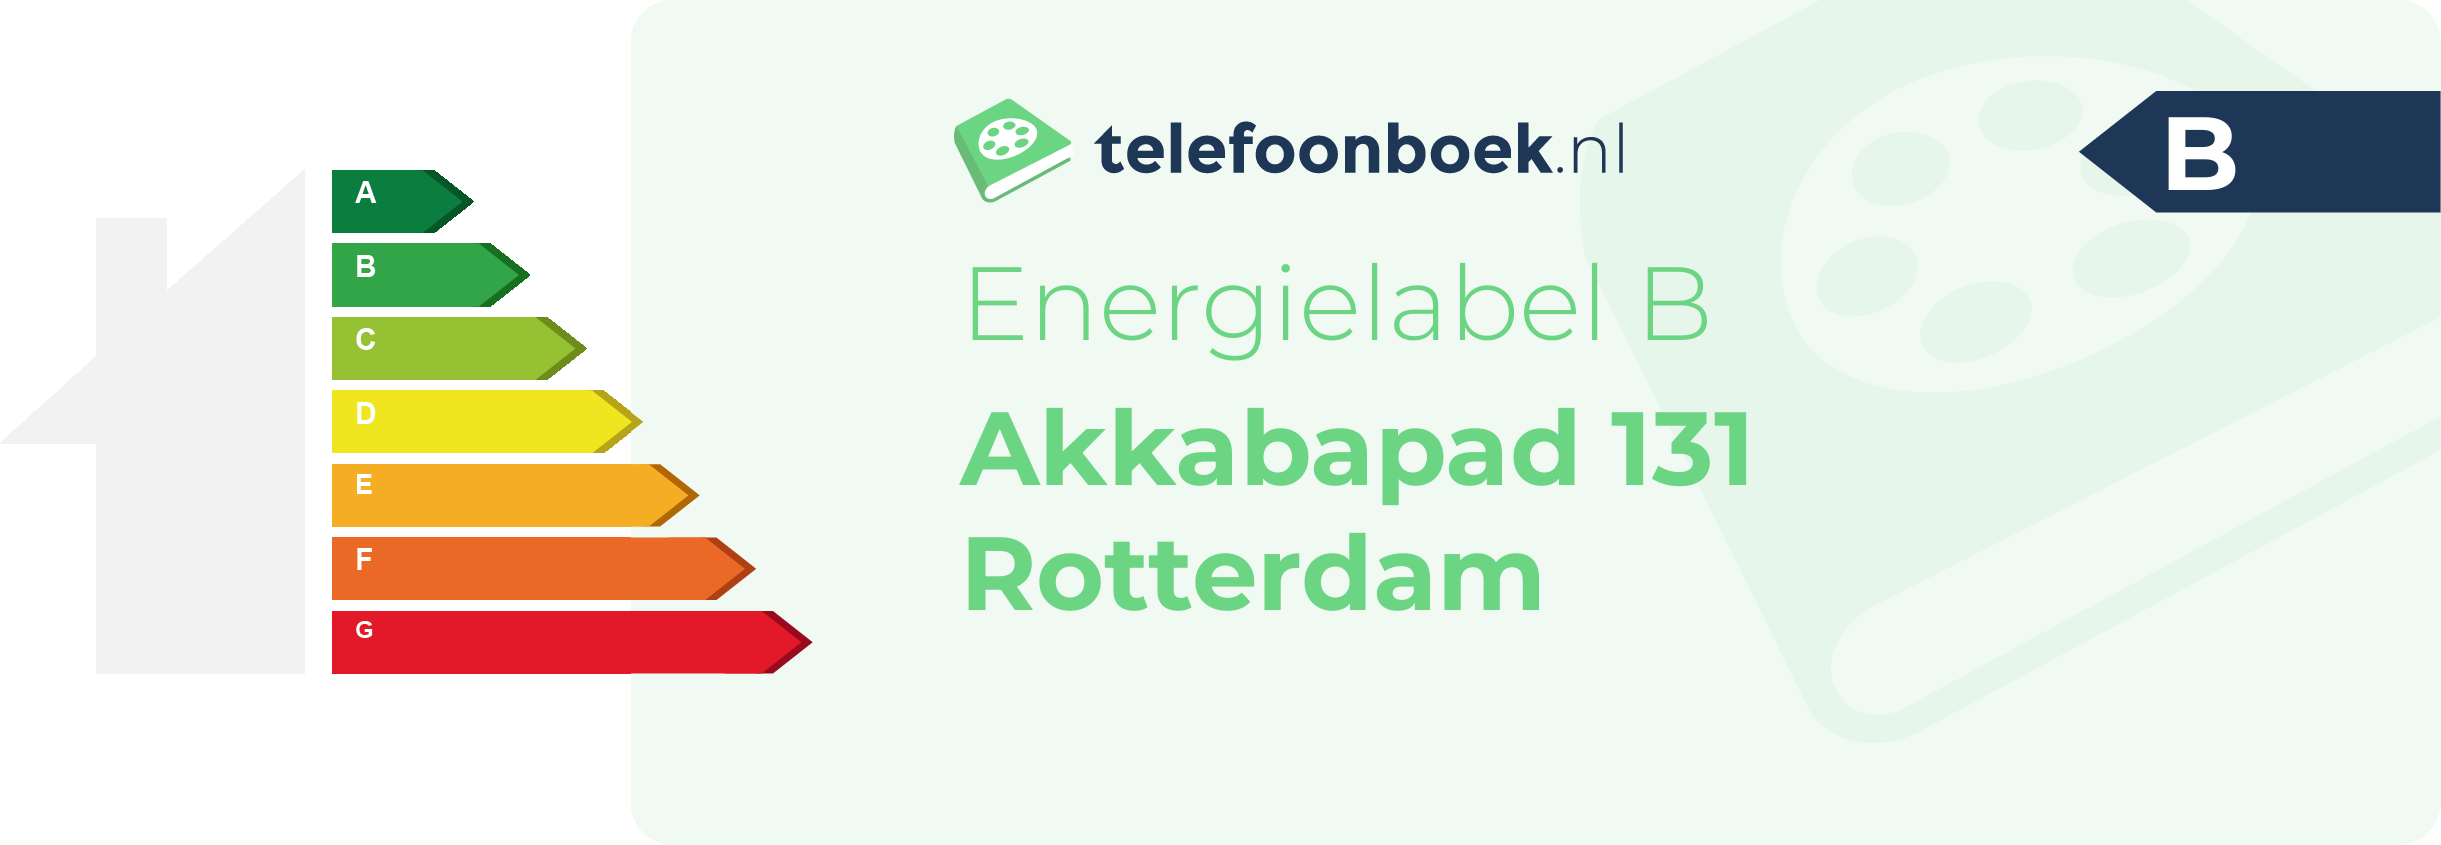 Energielabel Akkabapad 131 Rotterdam